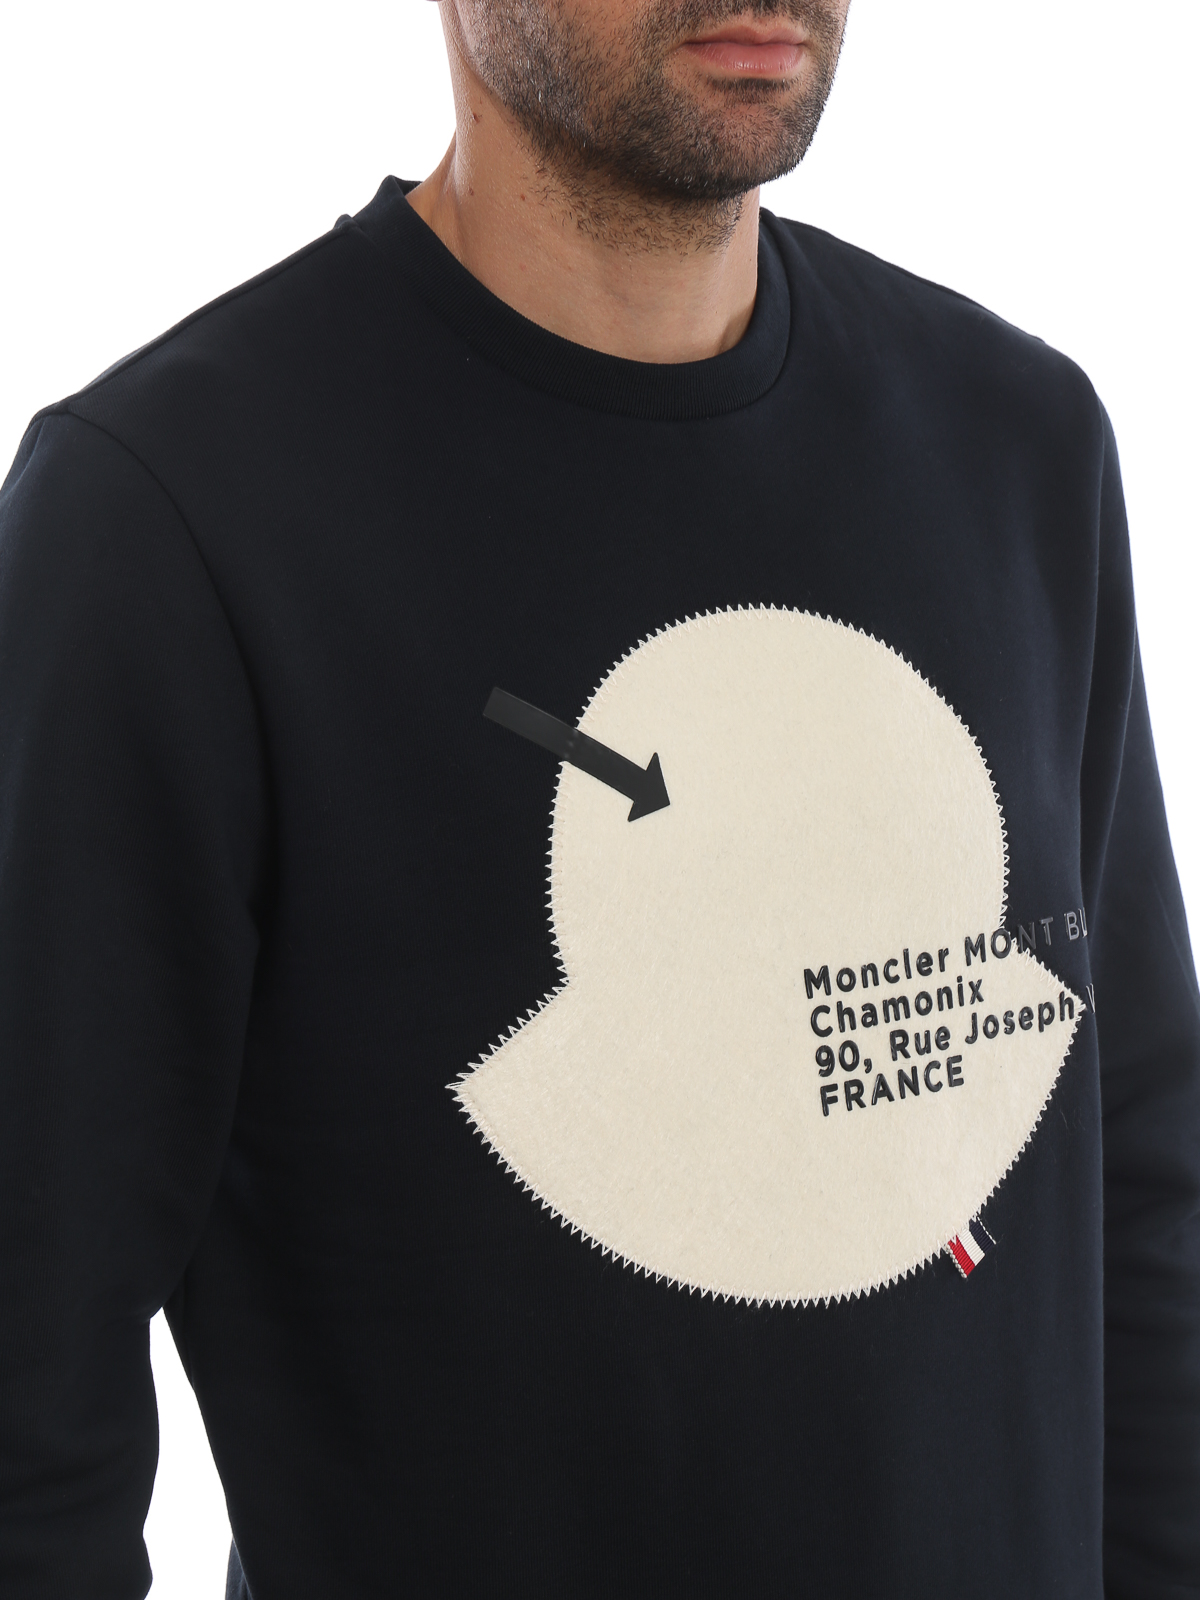 Moncler - Moncler Mont Blanc dark blue sweatshirt - Sweatshirts \u0026 Sweaters  - D2091803675080451773